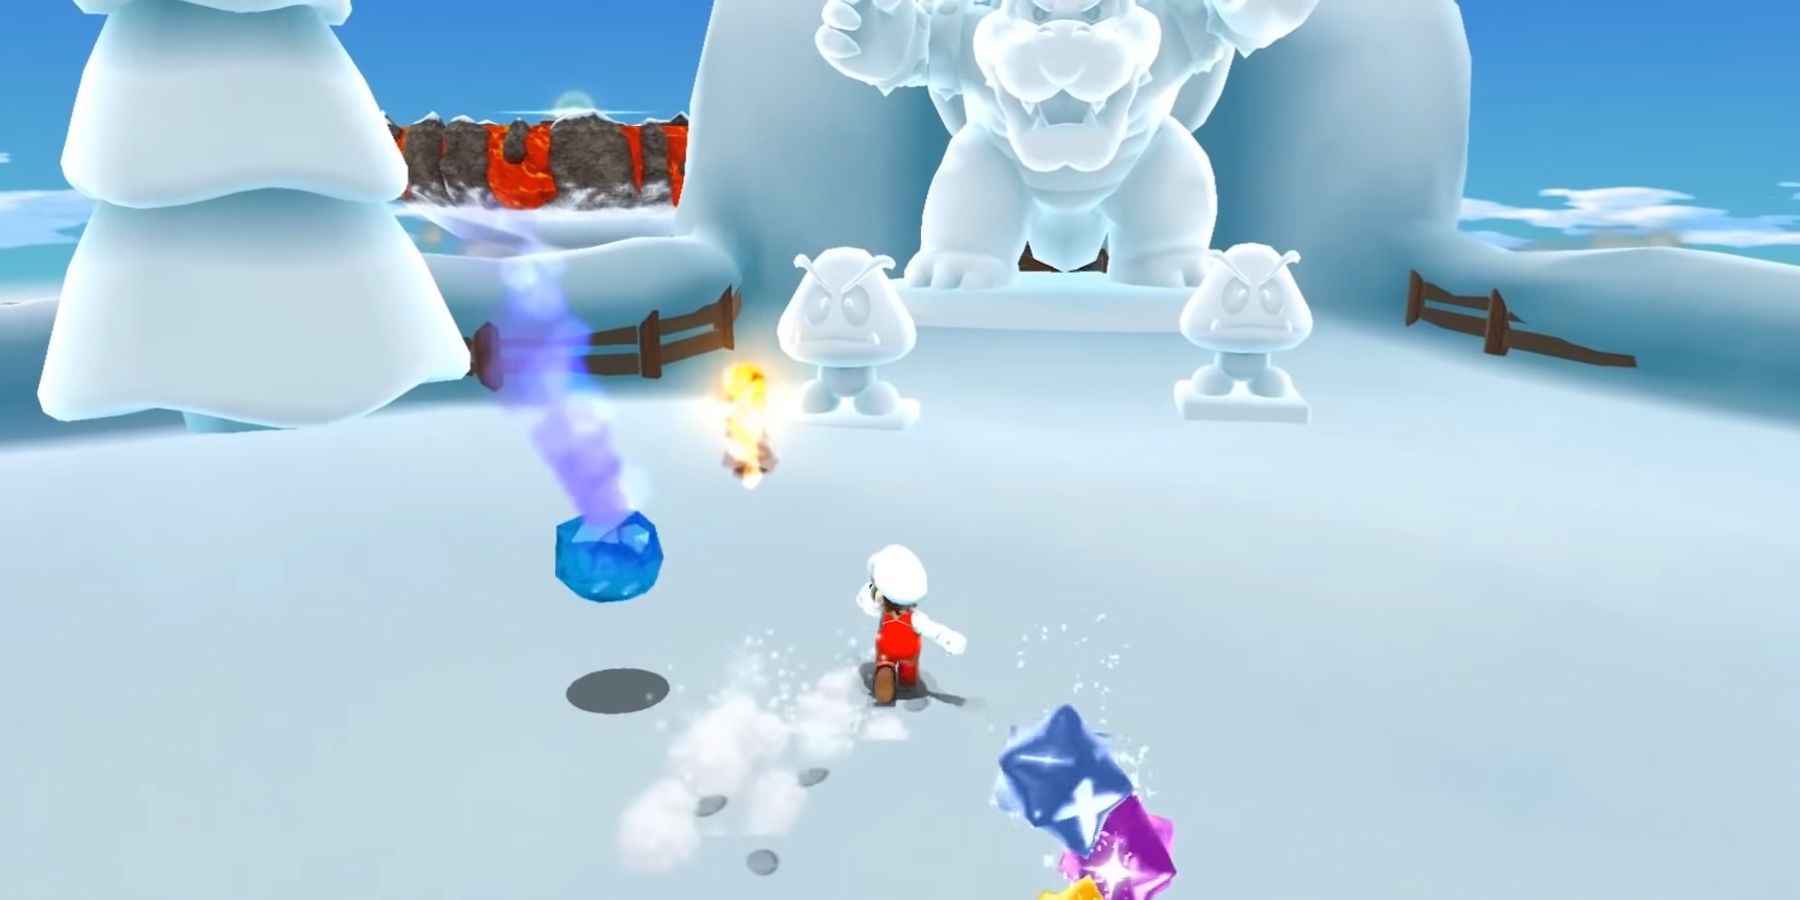 Mario running through Freezy Flake Galaxy in Super Mario Galaxy 2